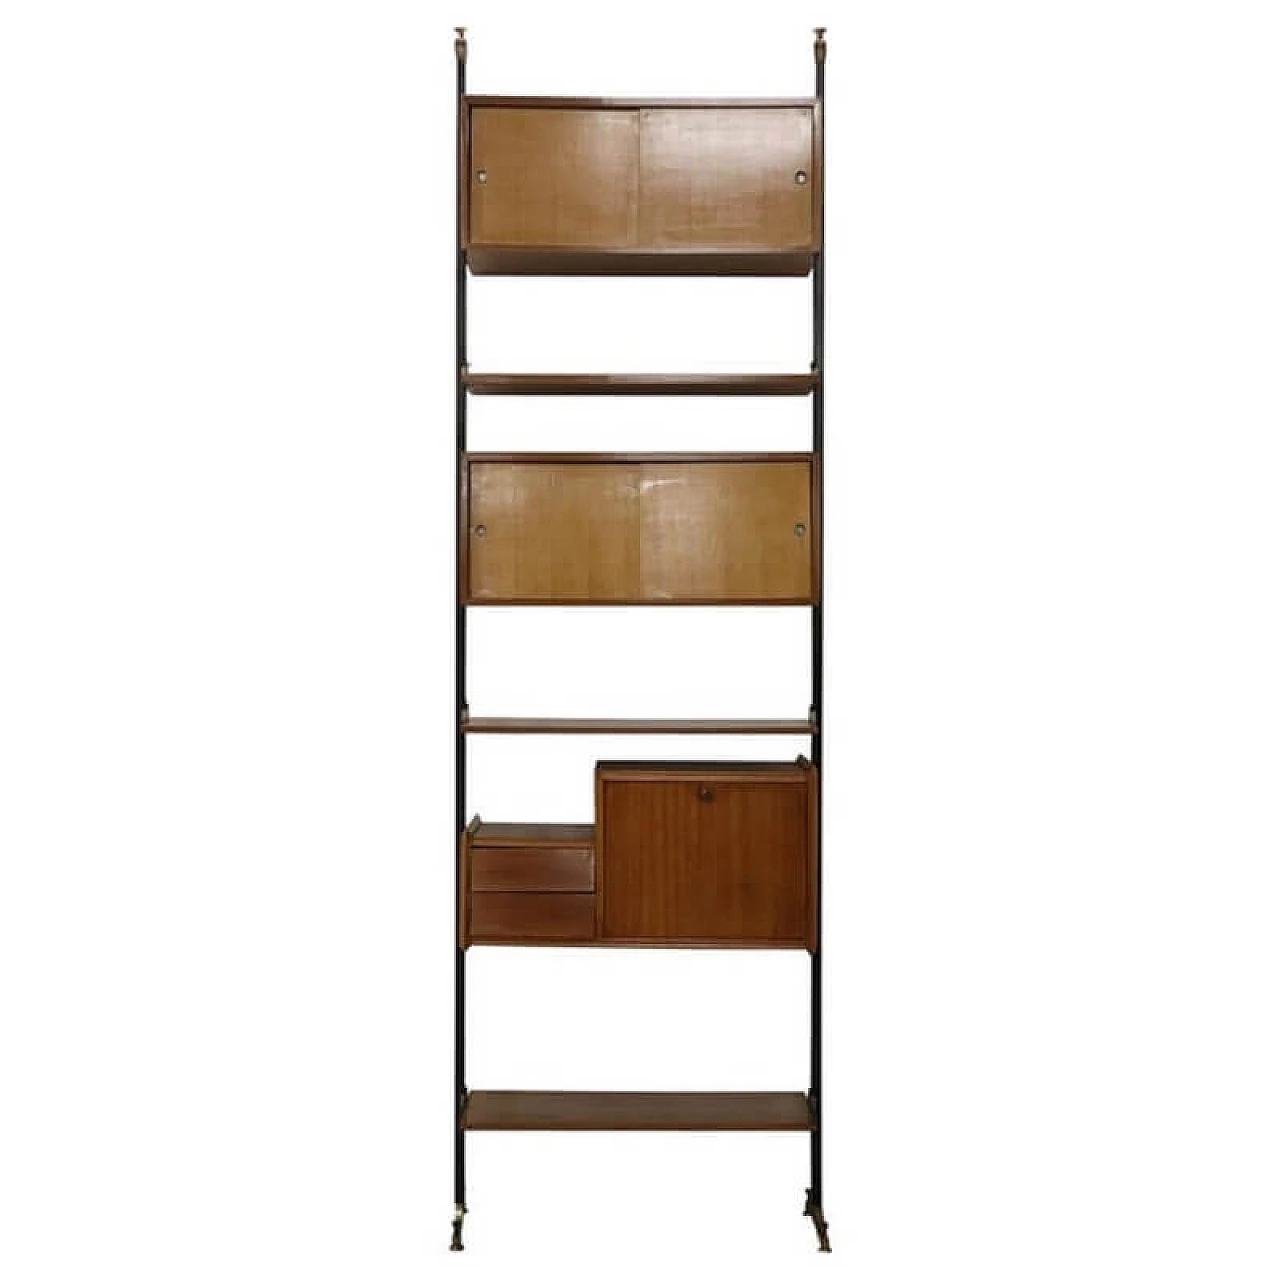 Self-supporting bookcase, Osvaldo Borsani style, 1950s 1080790